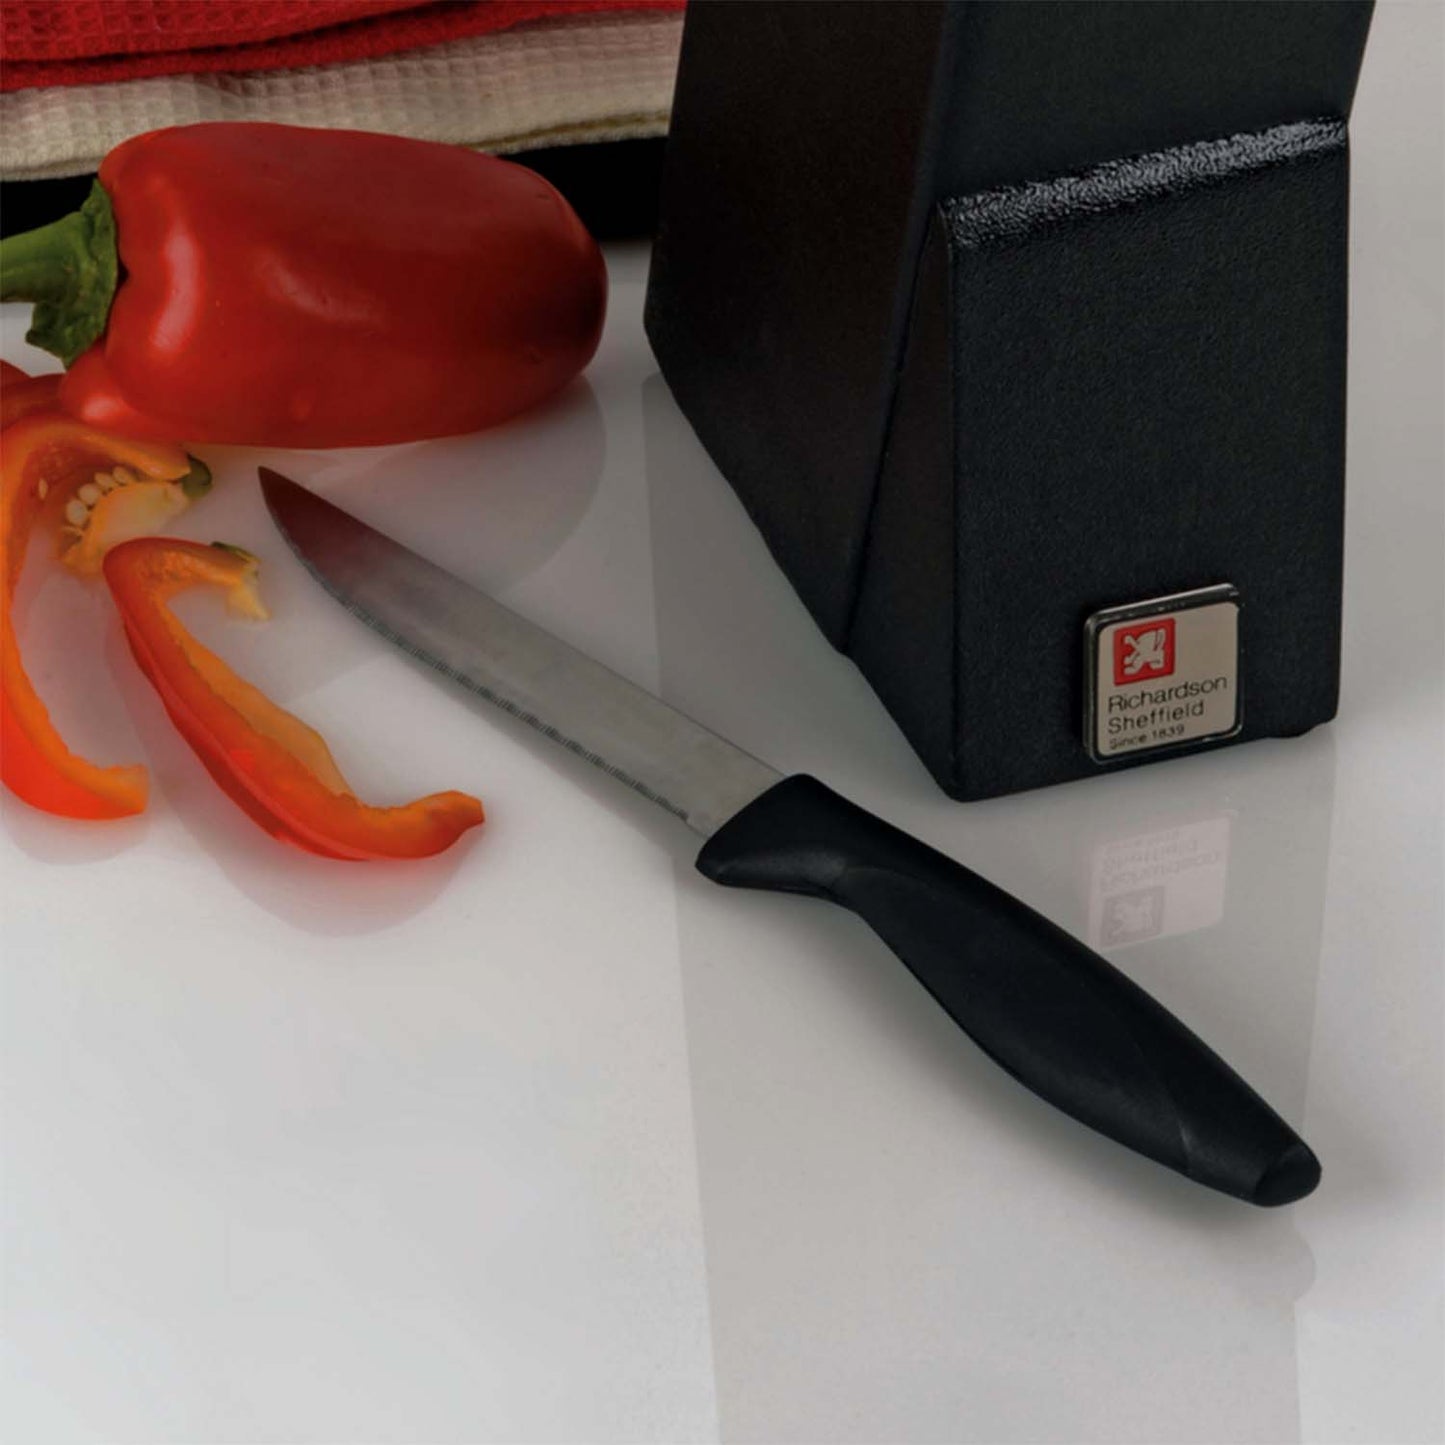 Richardson Sheffield Laser Cuisine Stainless Steel Knife Block, Set of 6